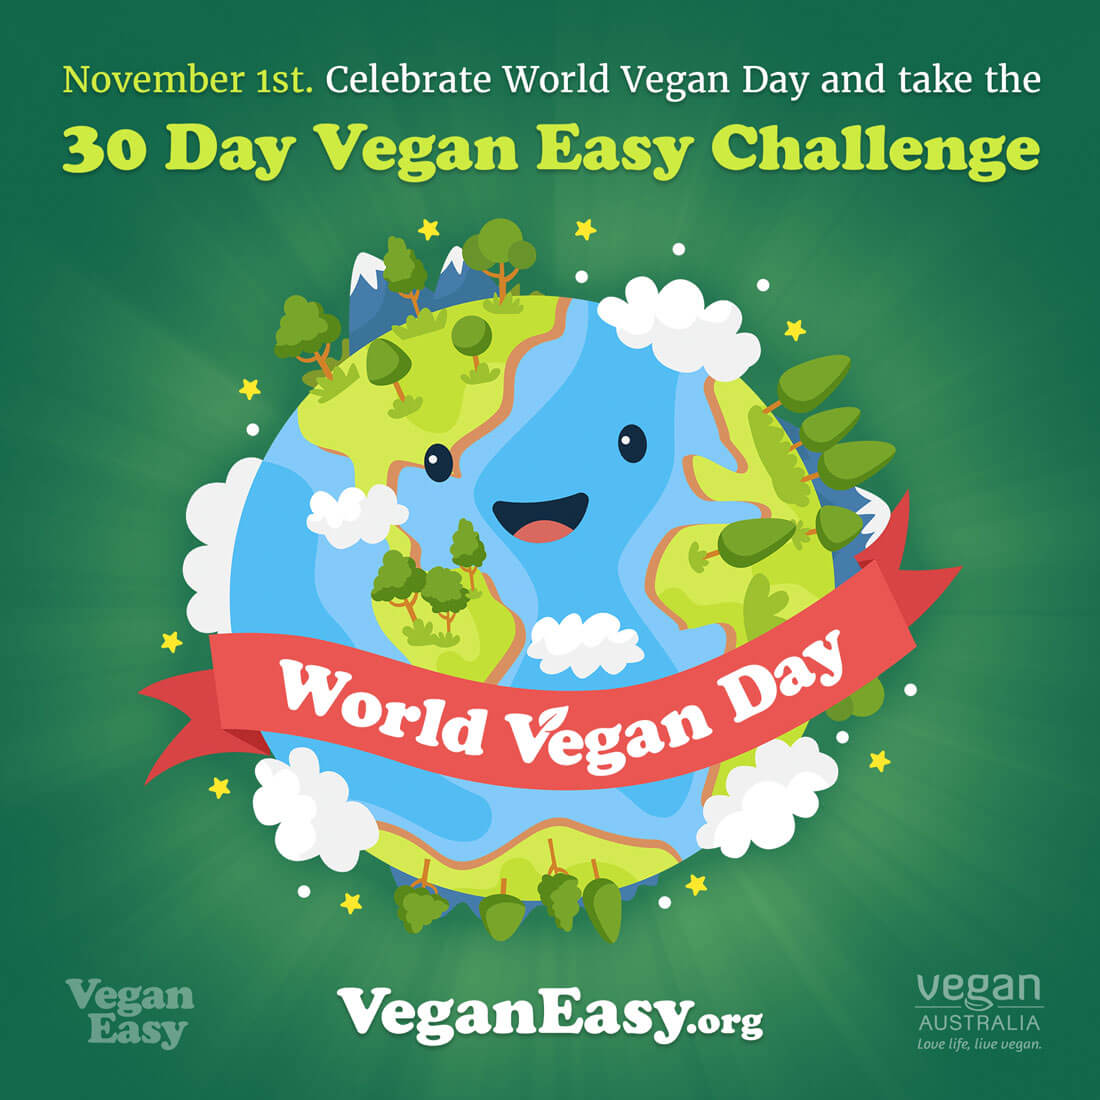 Kickstart a kinder, greener life with the 30-day Vegan Easy Challenge this World Vegan Day